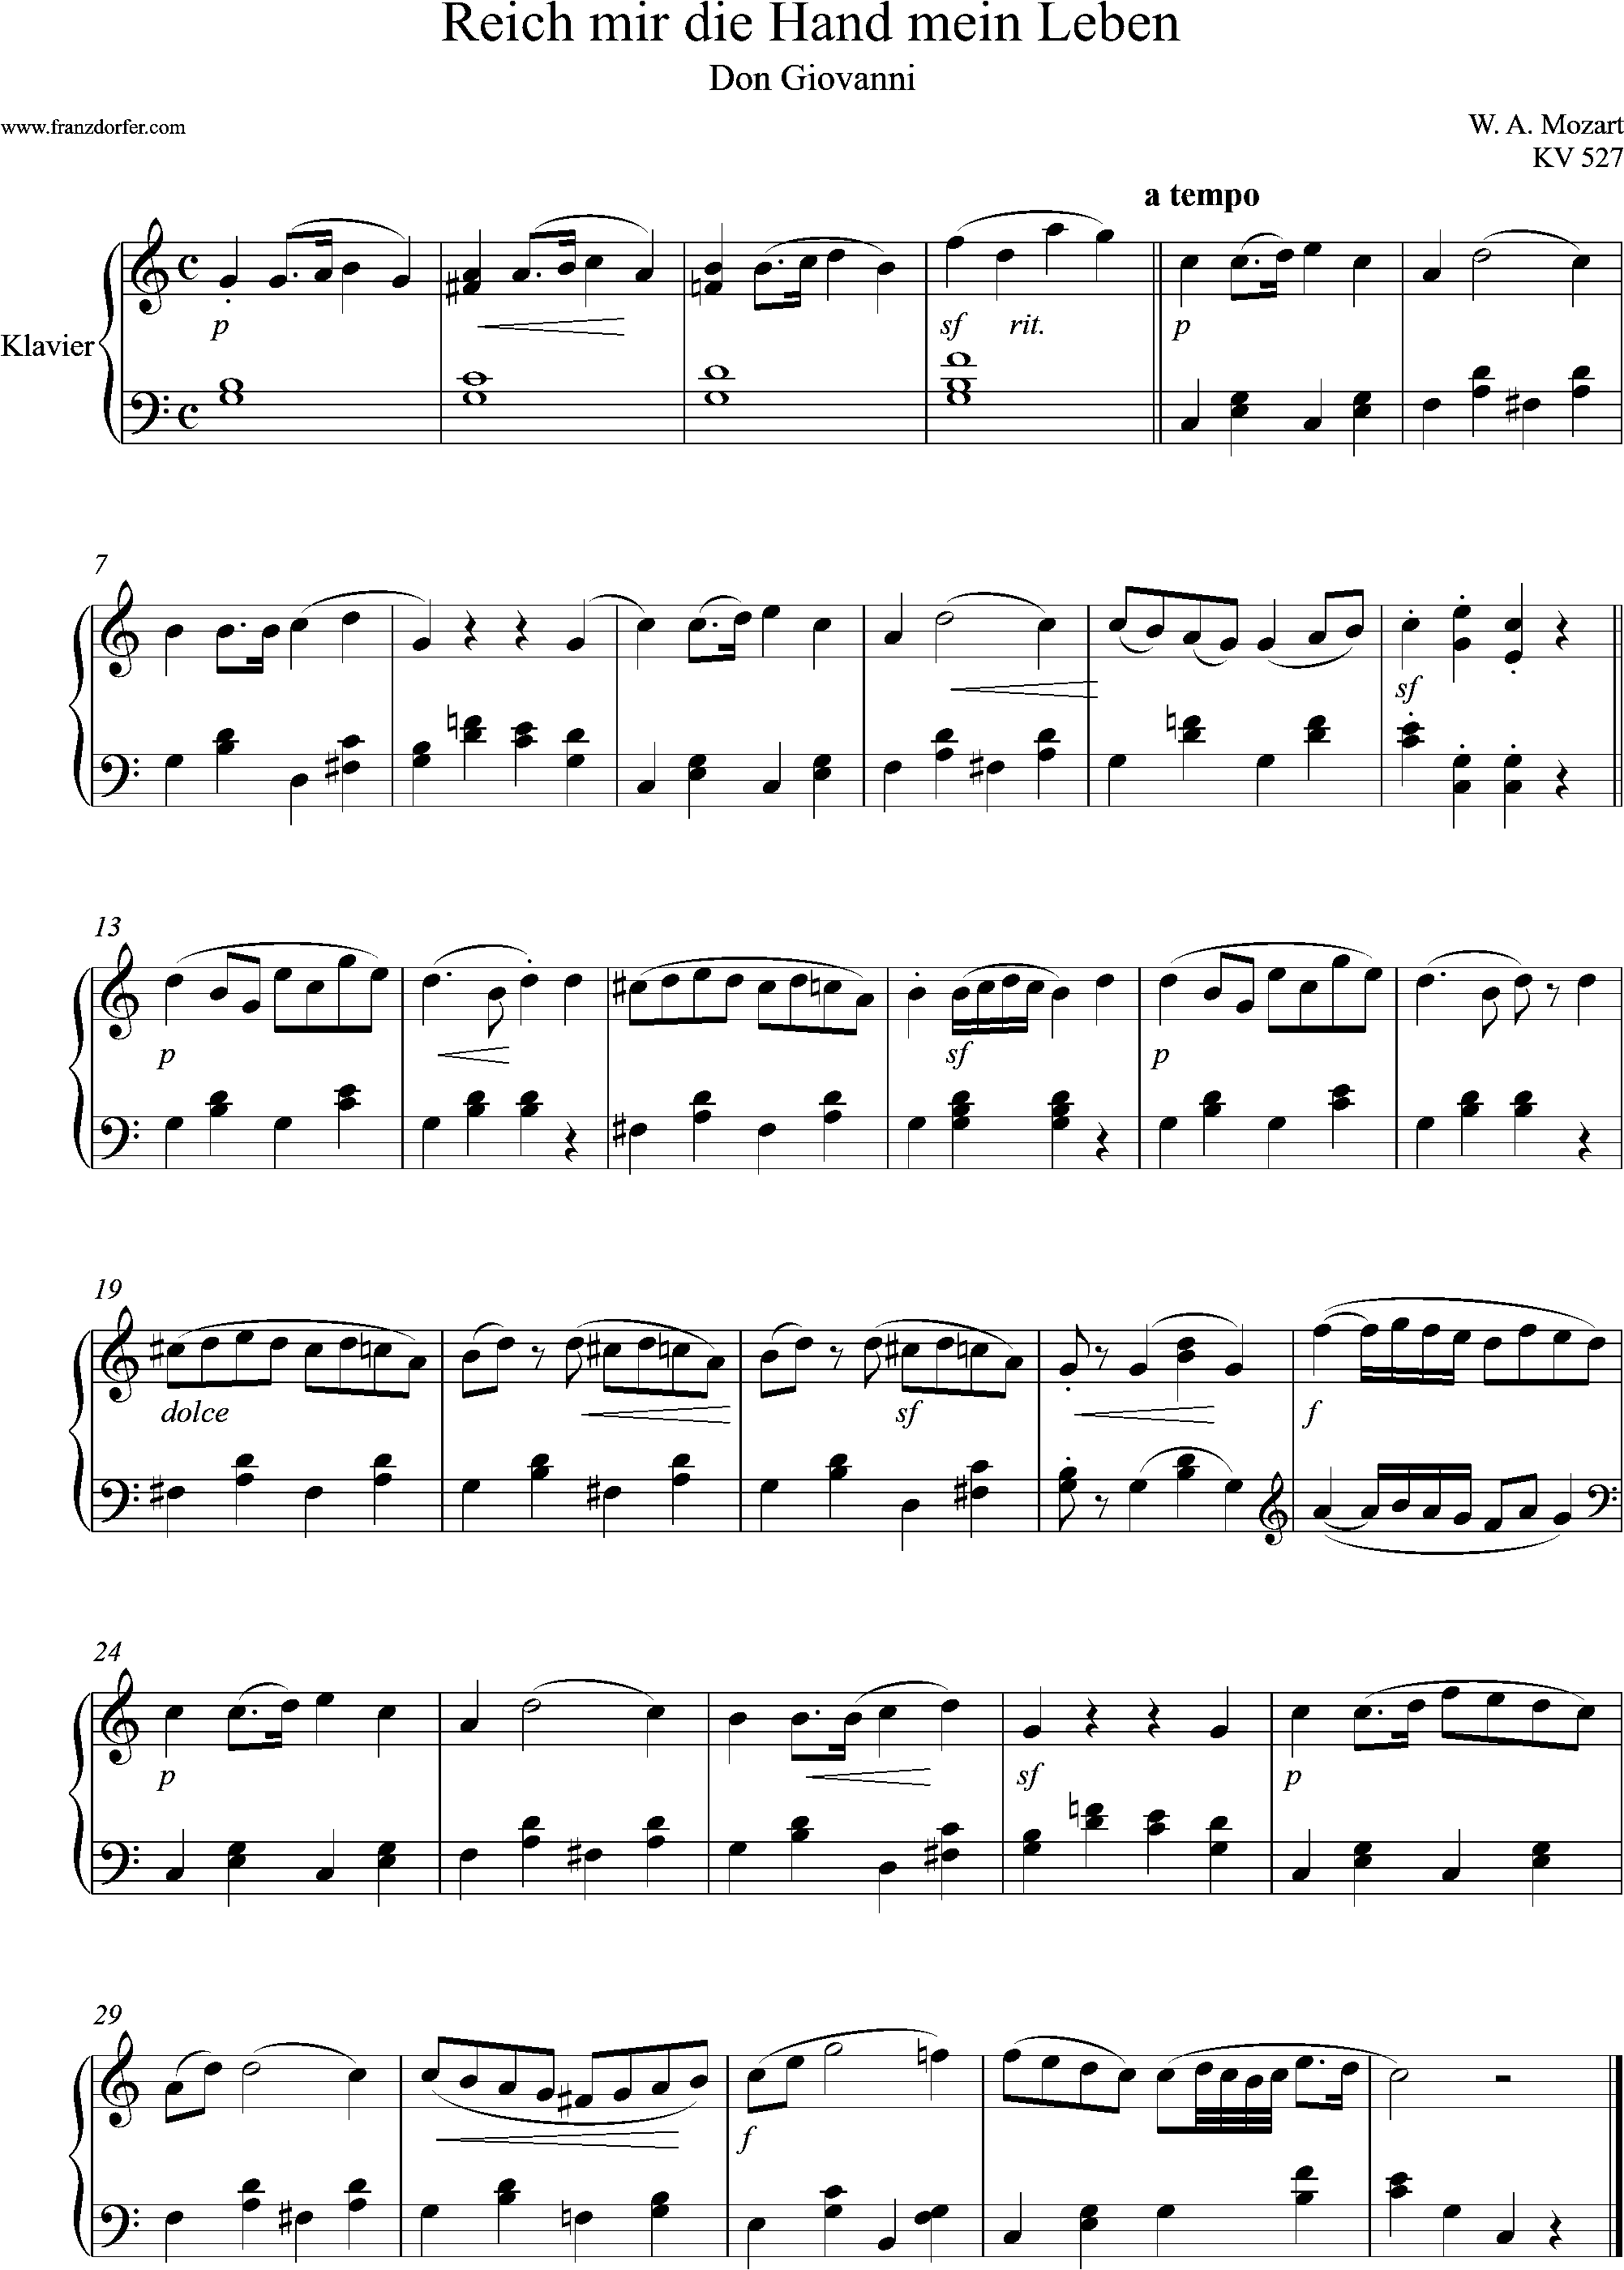 klaviernoten, Don Giovanni, kv 527, Mozart